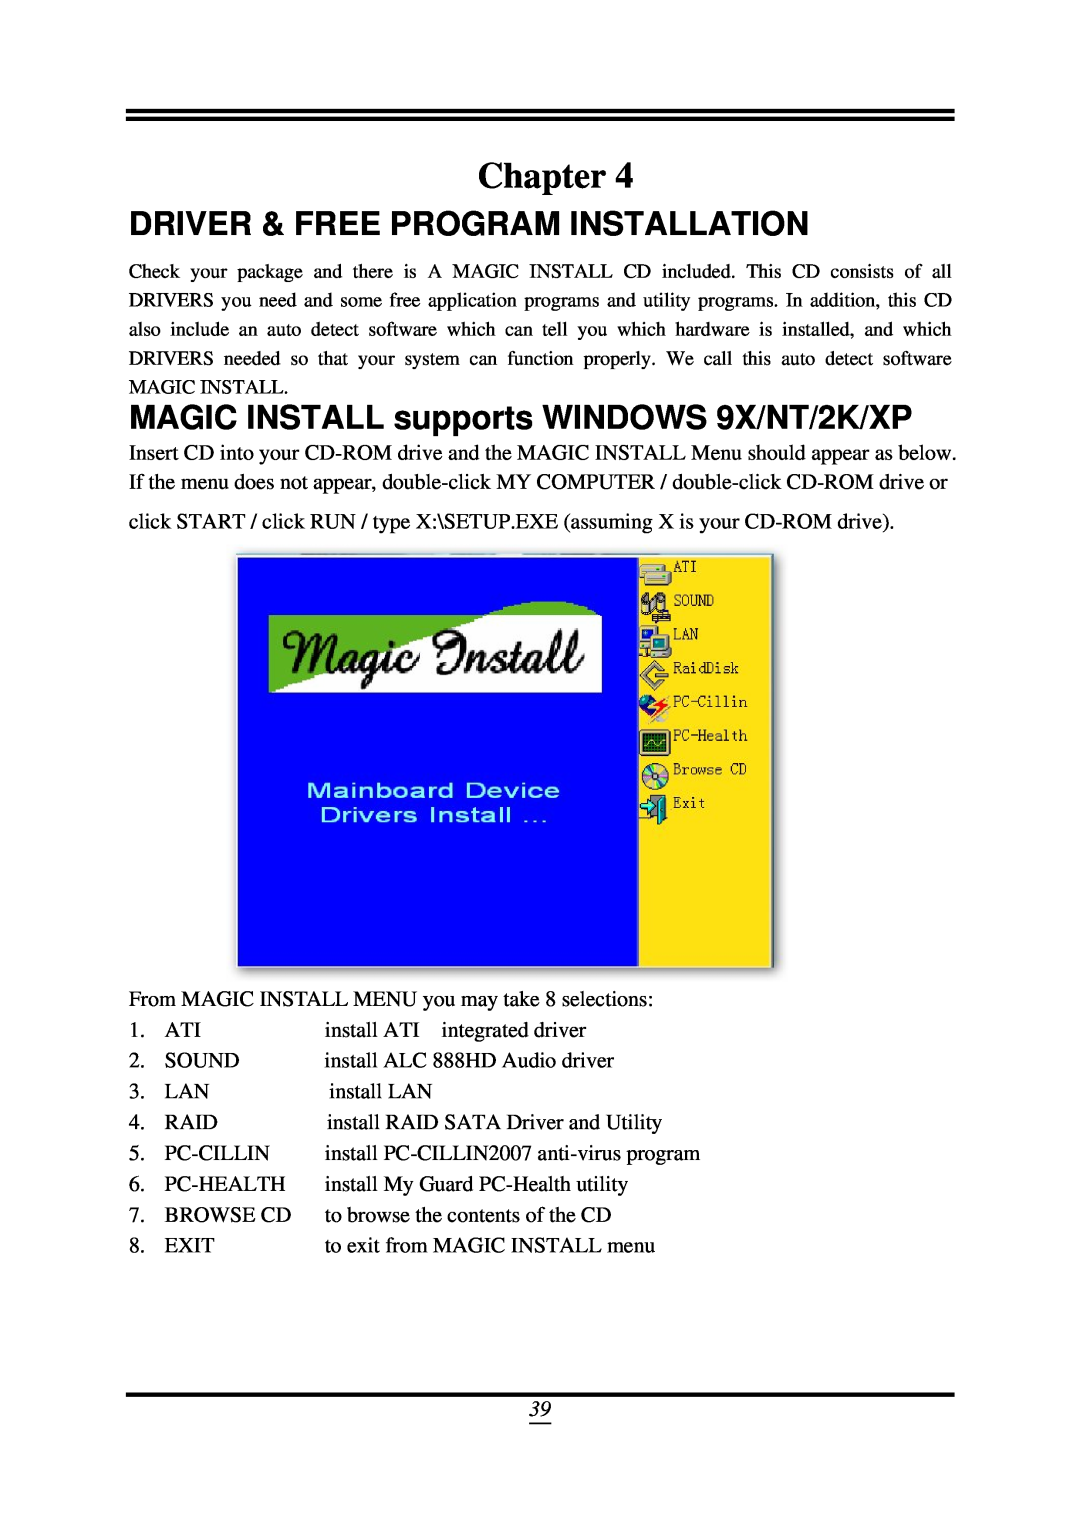 AMD 790GX, SB750 user manual Chapter, Driver & Free Program Installation, MAGIC INSTALL supports WINDOWS 9X/NT/2K/XP 